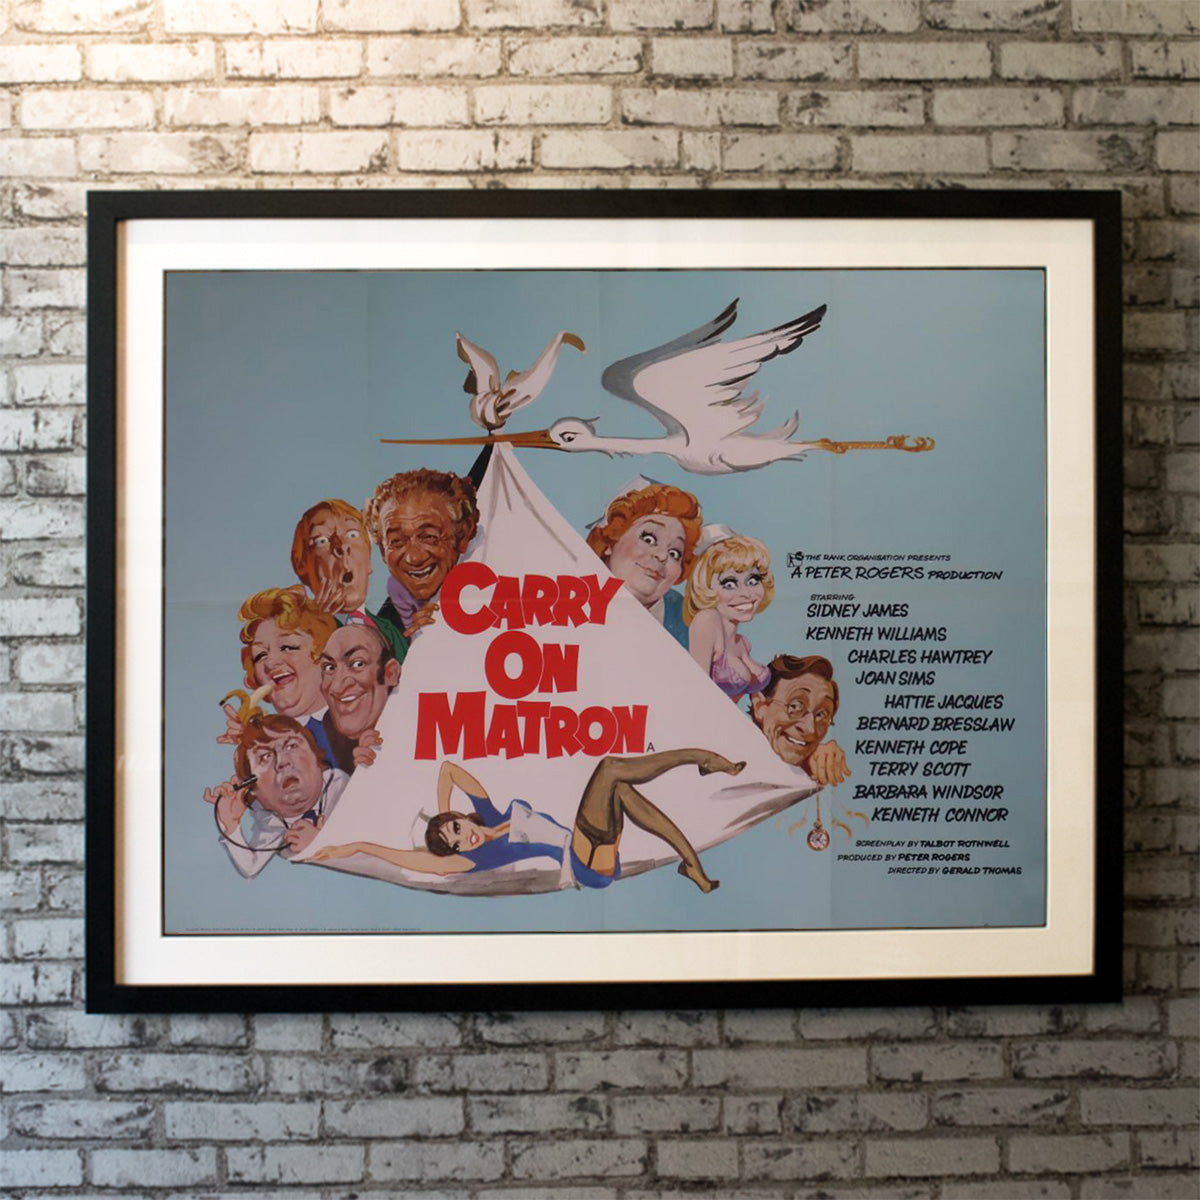 Original Movie Poster of Carry On Matron (1972)